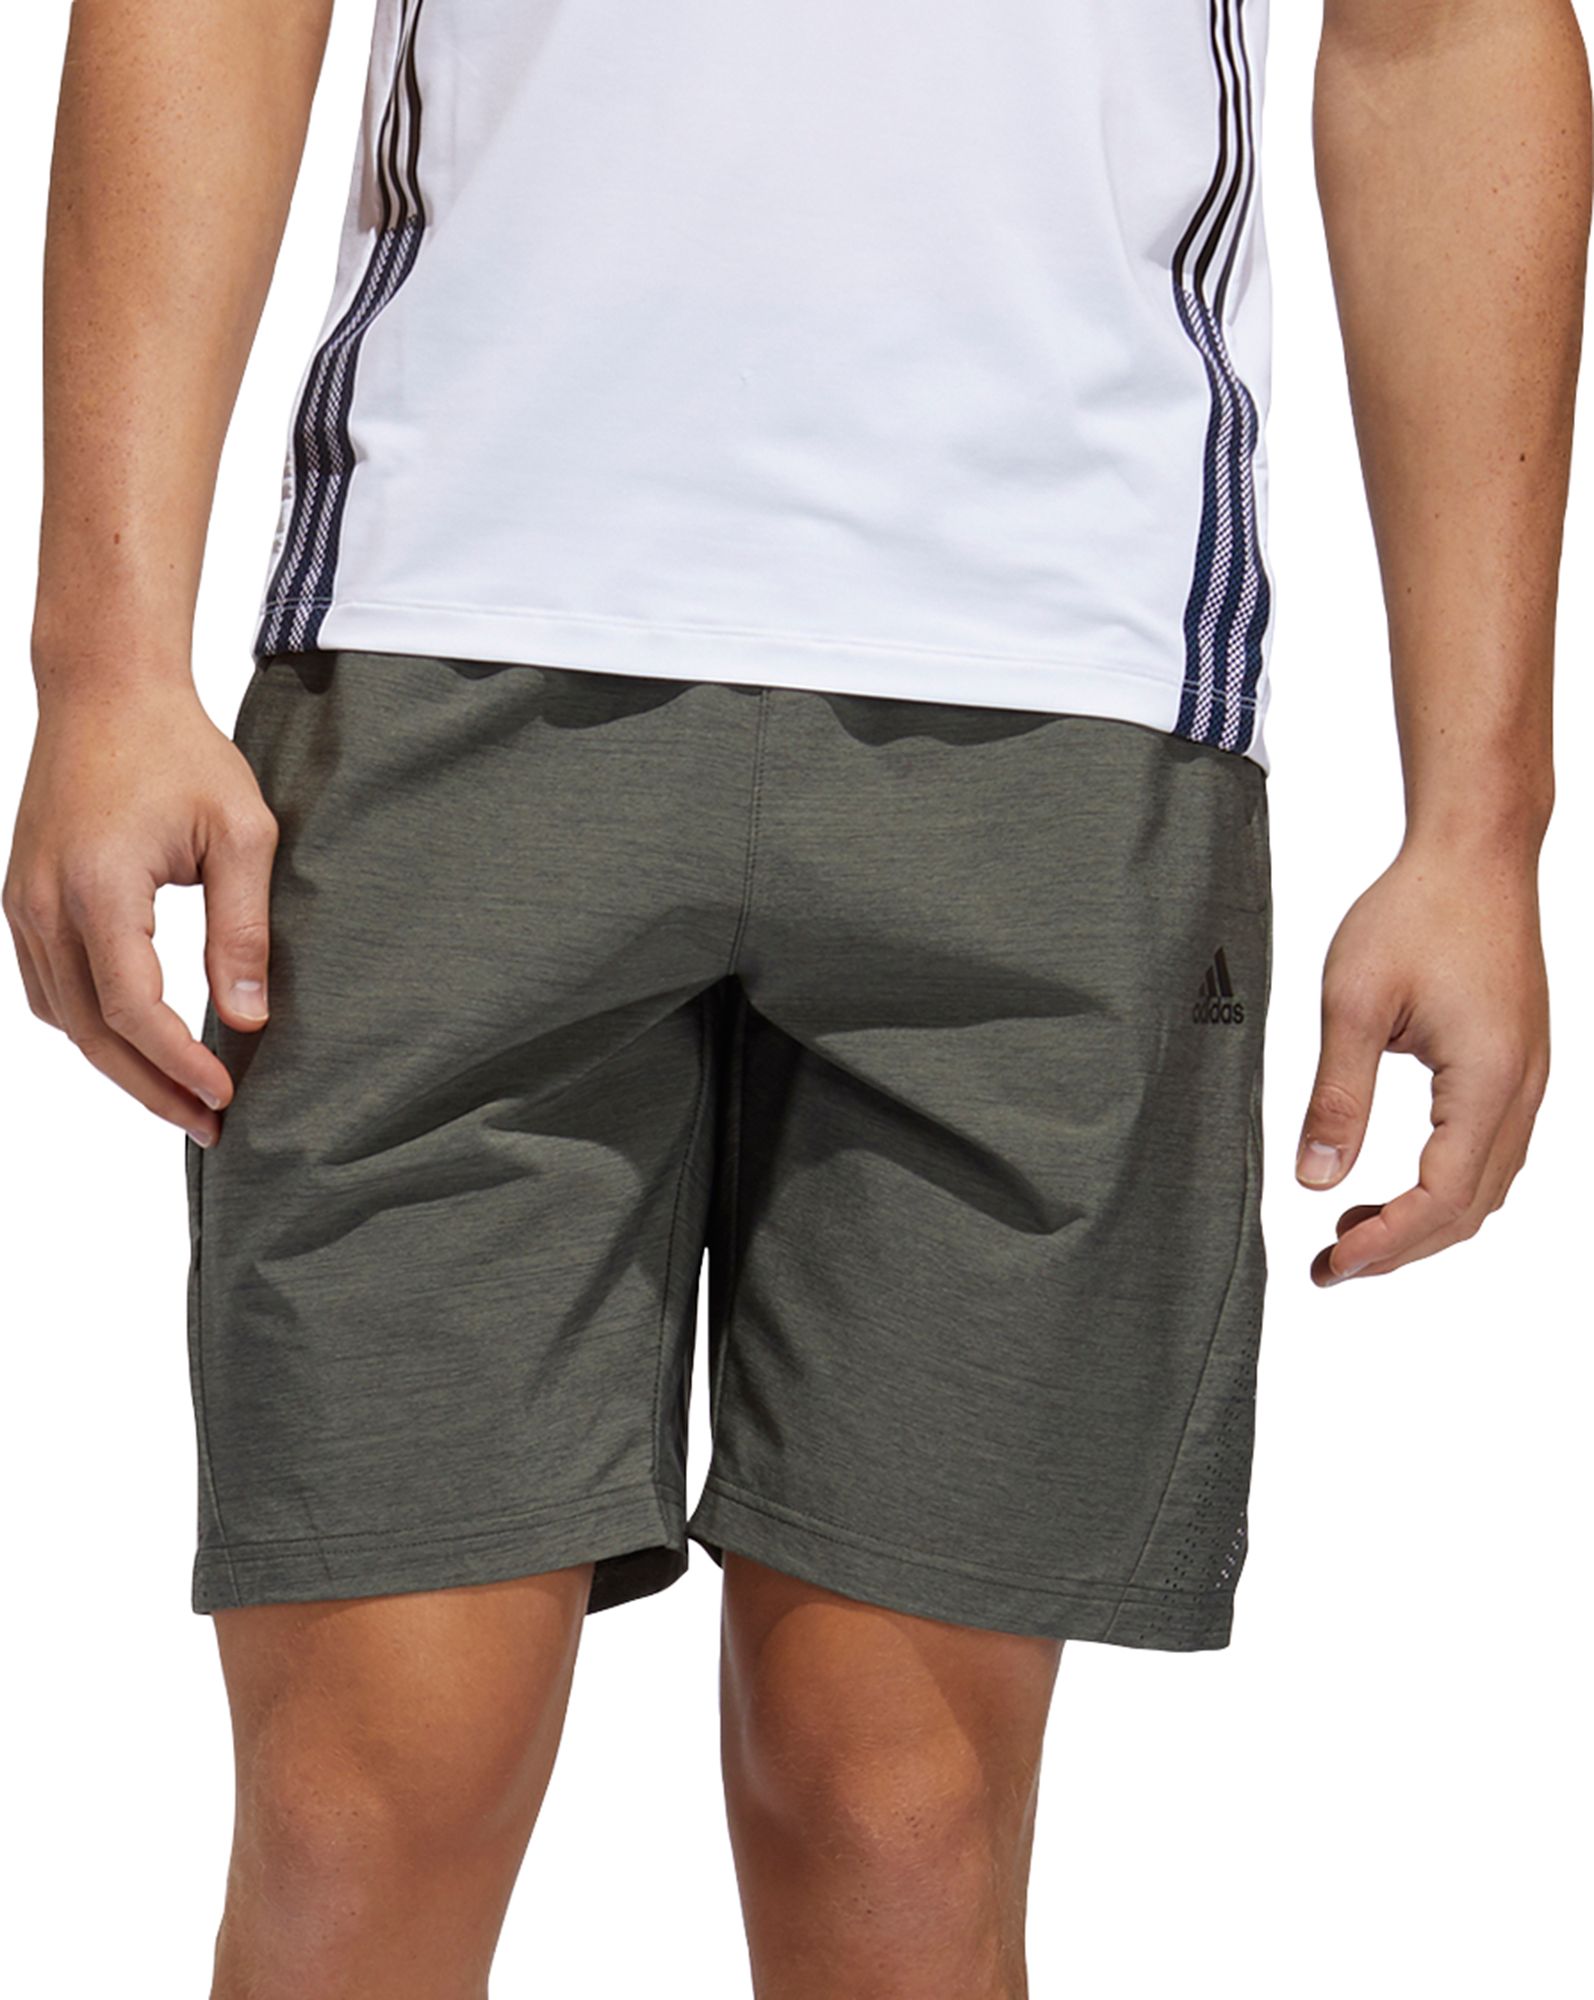 adidas men's axis 20 woven training shorts